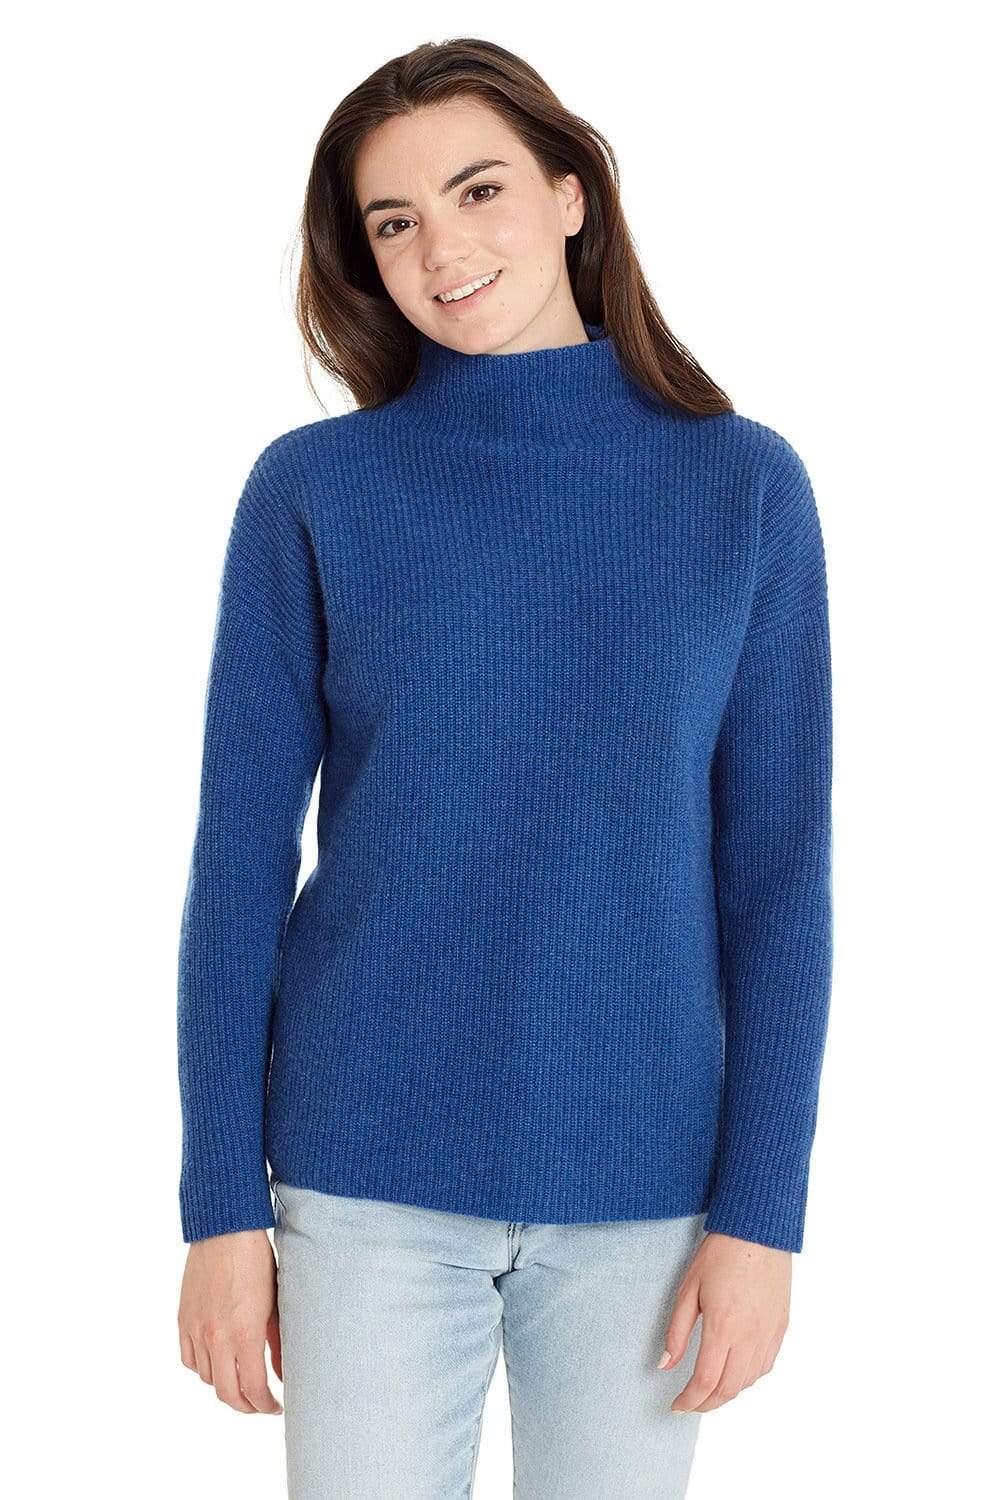 Women's Premium Cashmere Sweater - Thick Mock Turtleneck Pullover